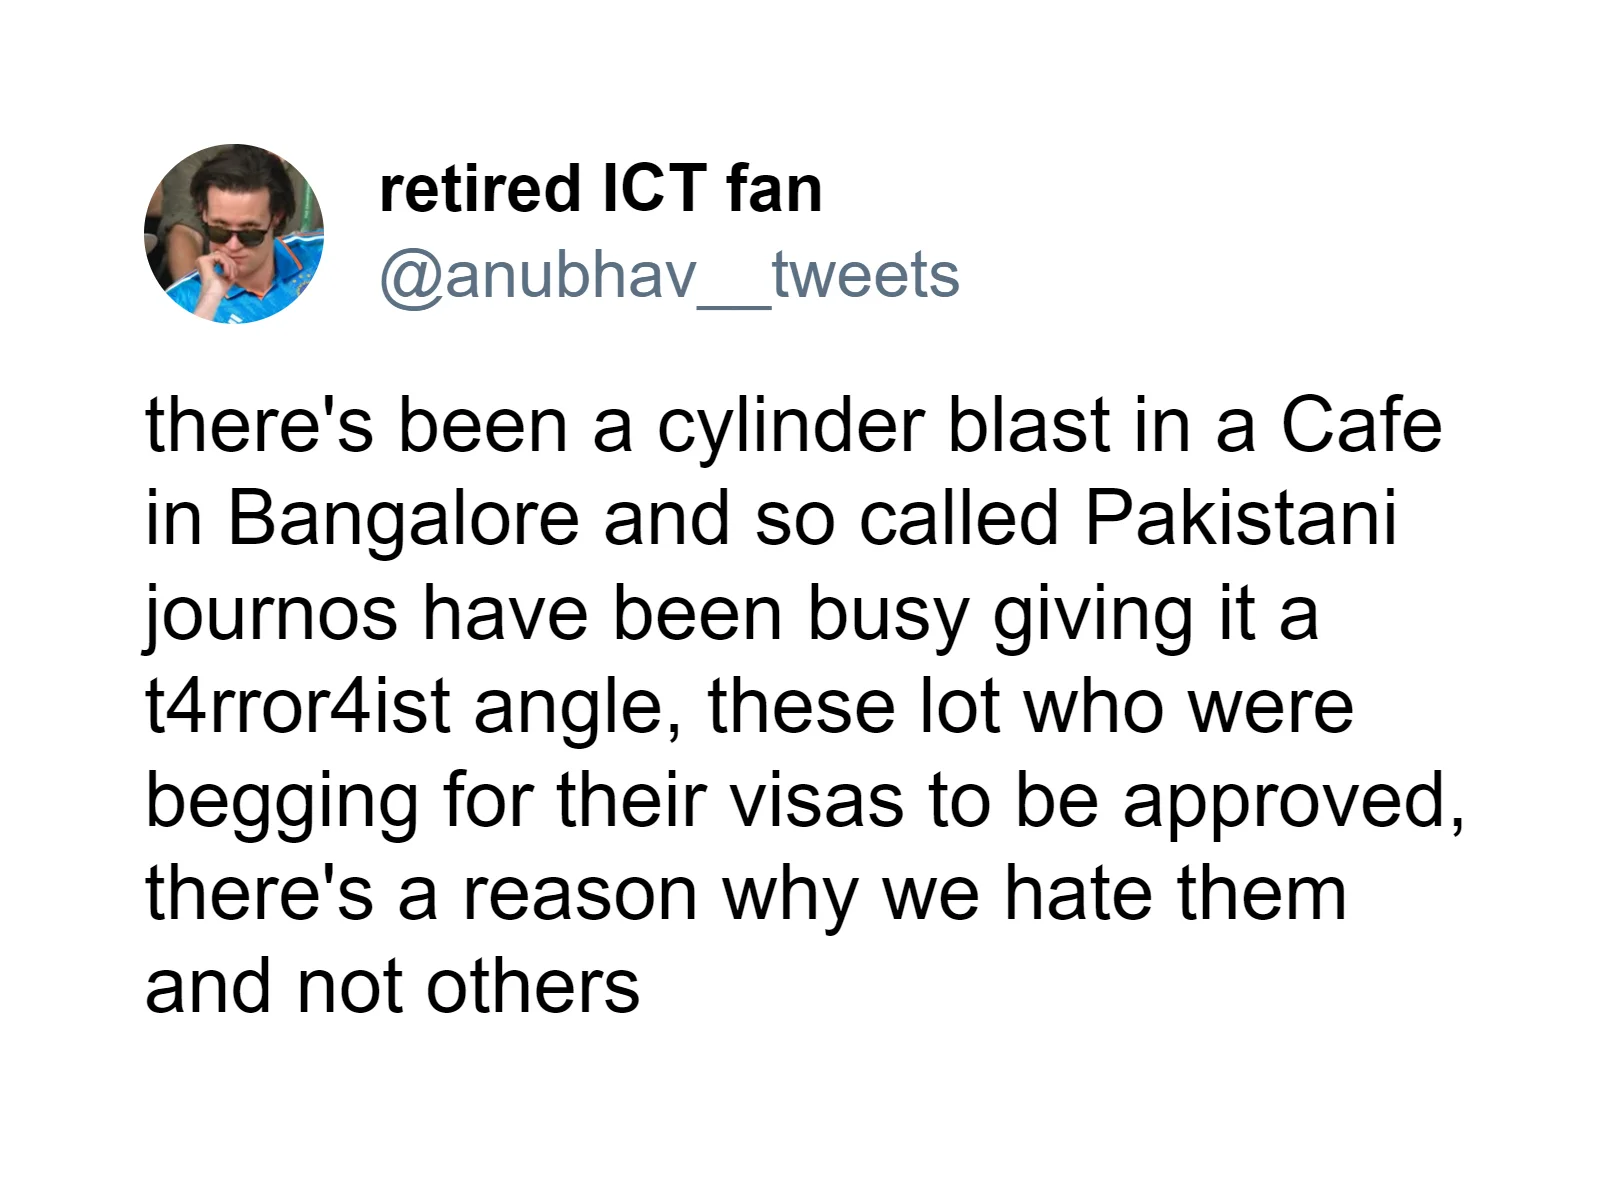 Shameless Pakistan Give Terrorist Angle To Cylinder Blast In Bengaluru